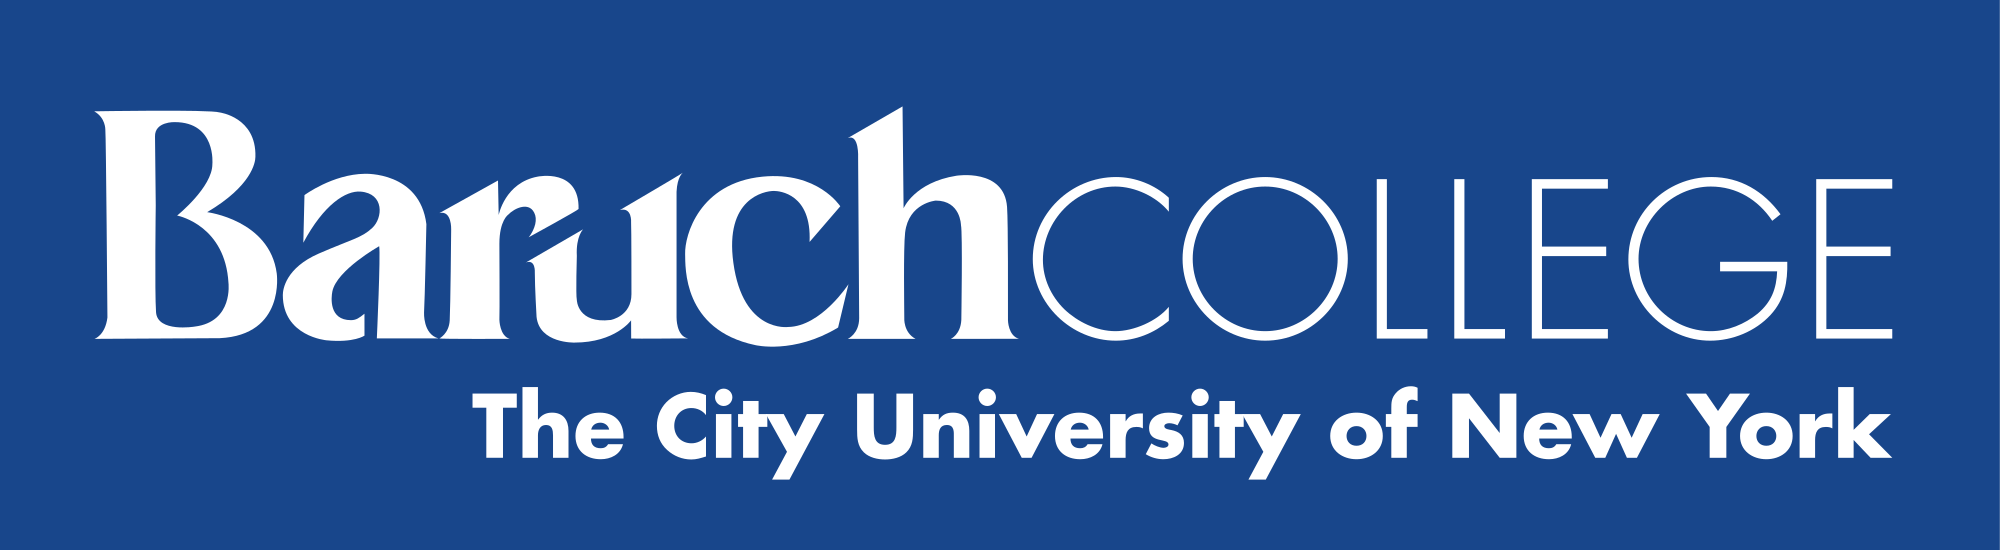 Inside Higher Ed | CUNY Bernard M Baruch College